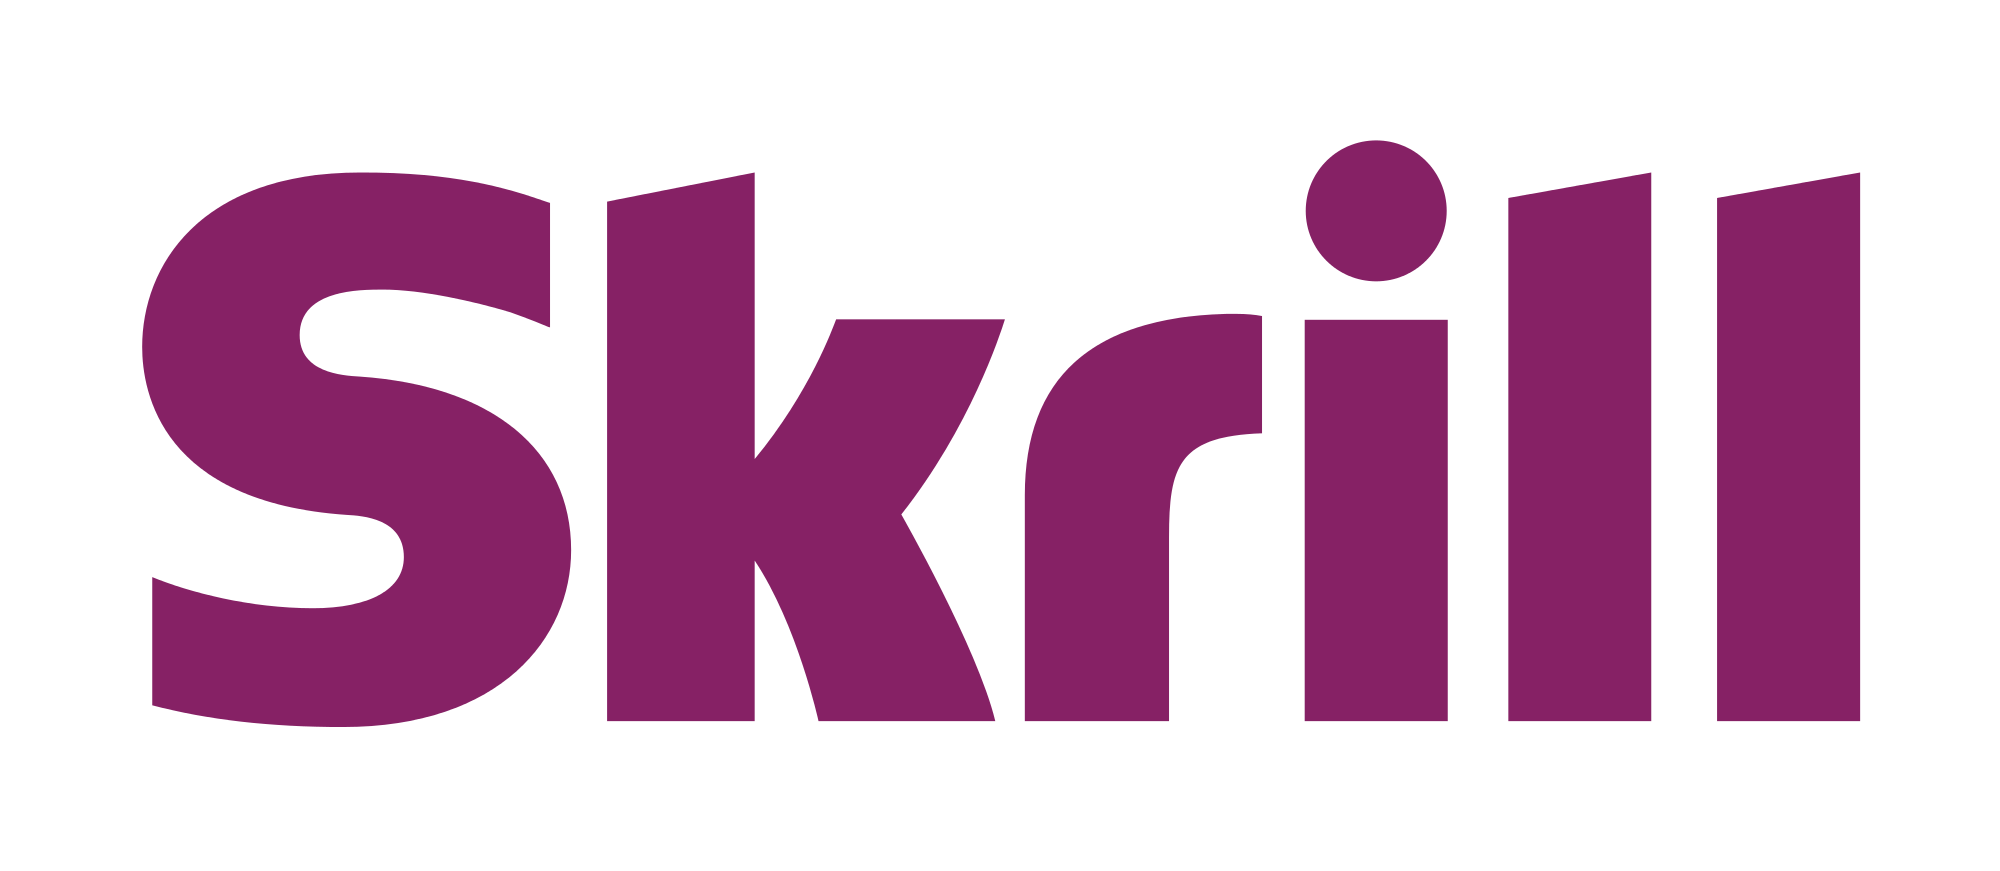 Skrill_primary_logo_RGB.svg